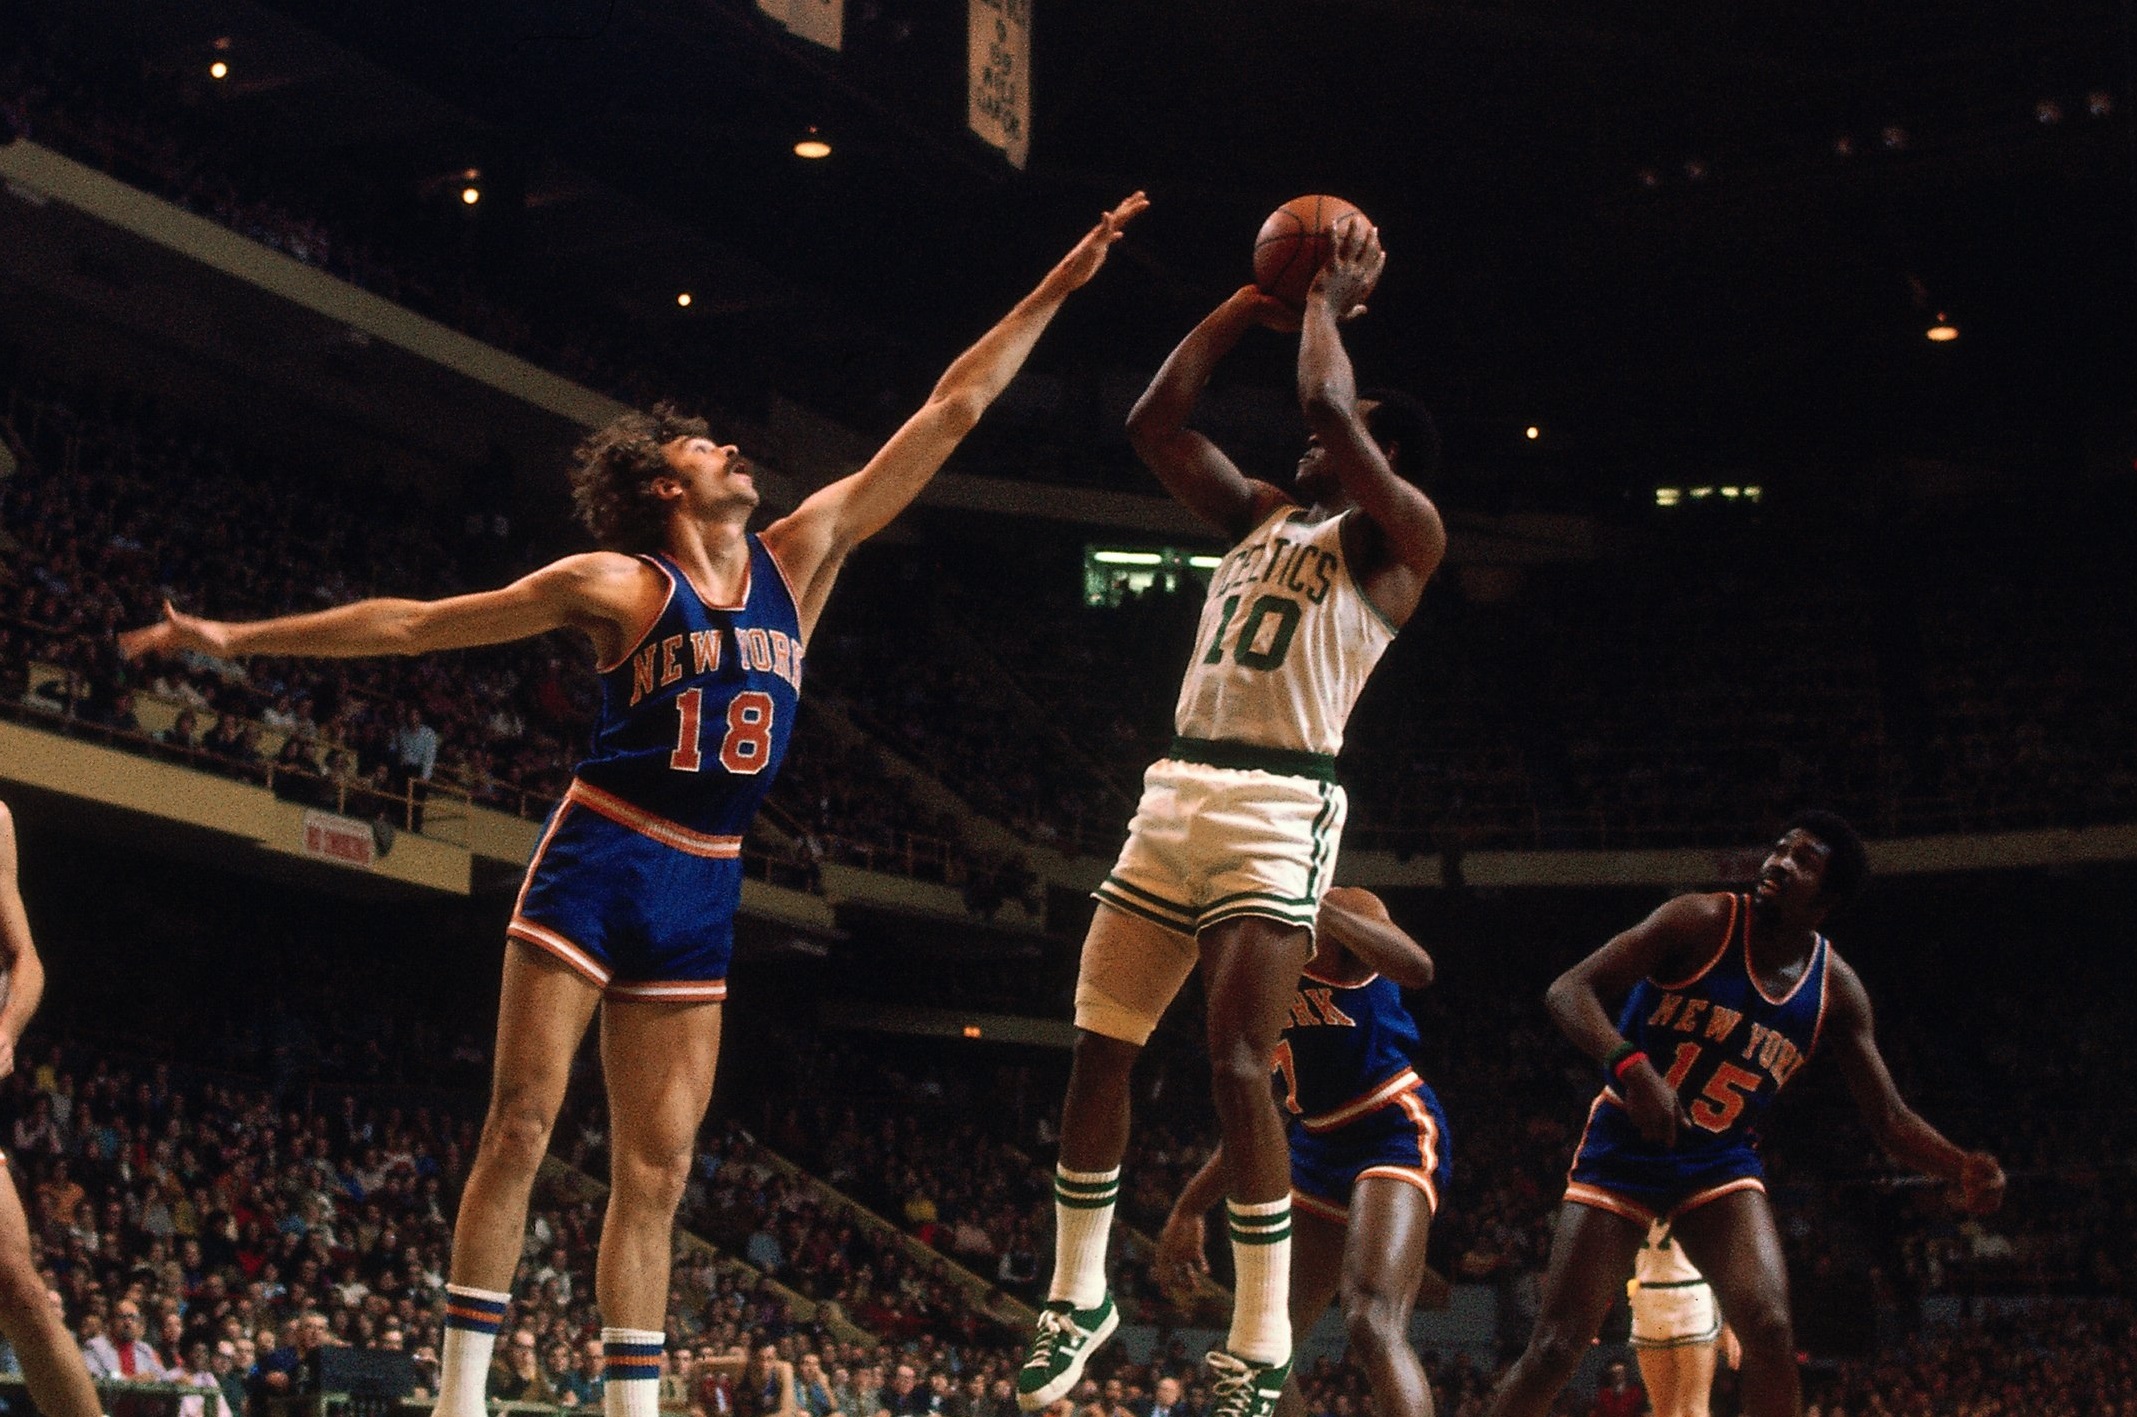 New York Knicks vs. Boston Celtics